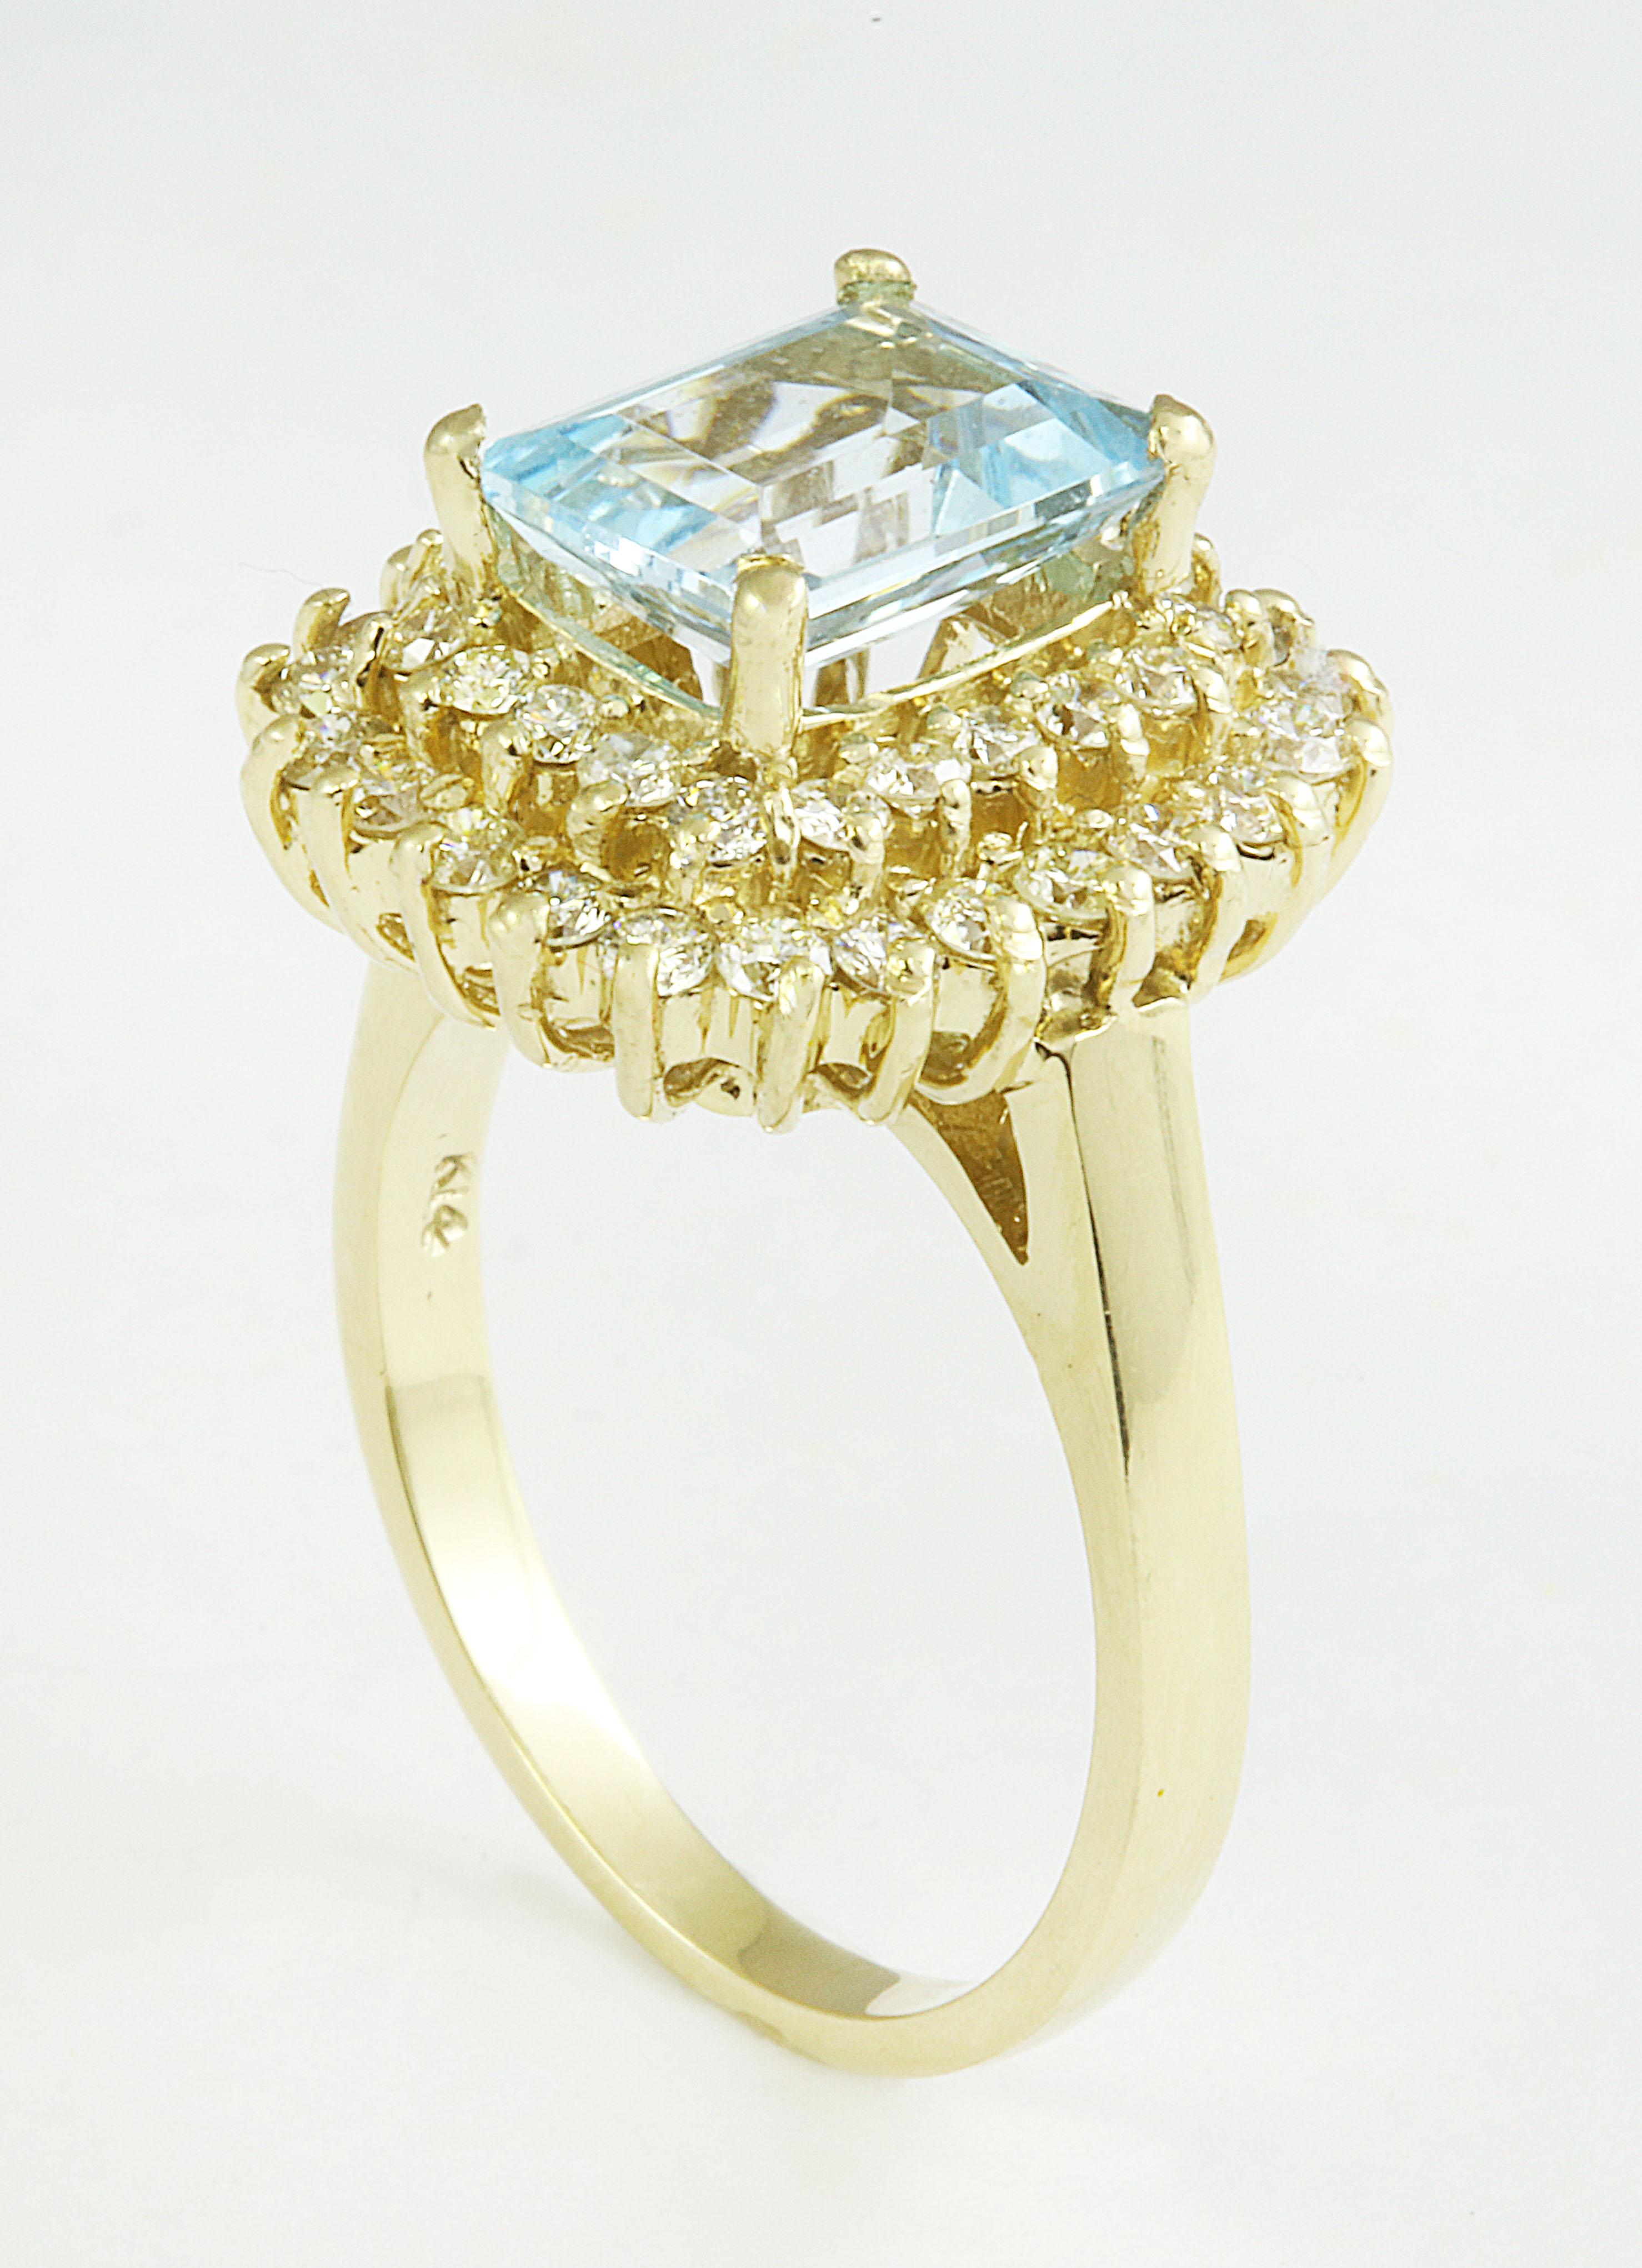 Emerald Cut Dazzling Natural Aquamarine Diamond Ring In 14 Karat Yellow Gold  For Sale